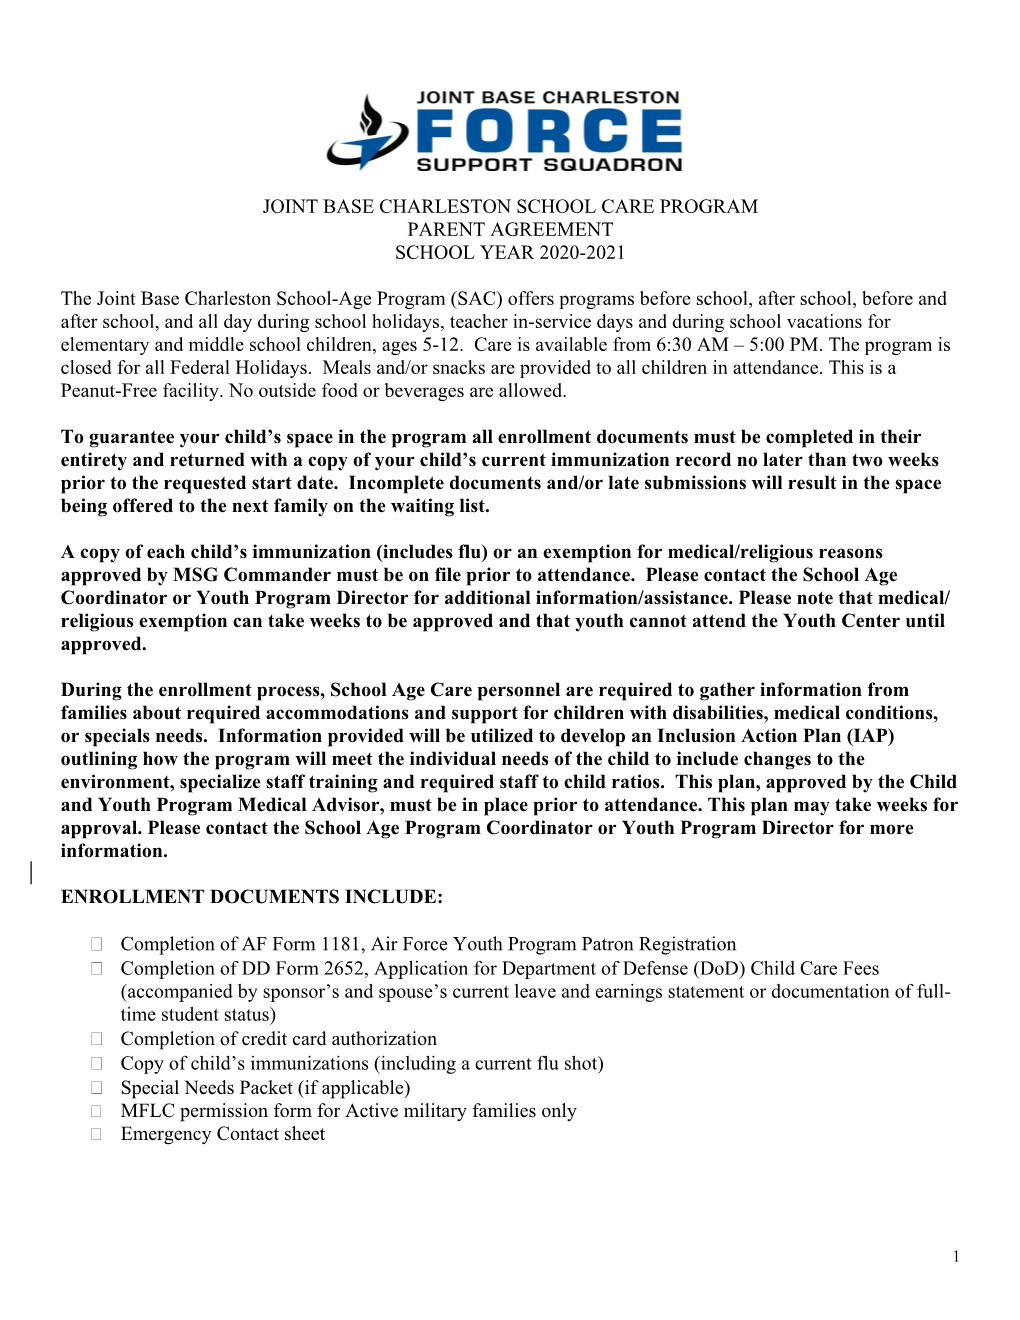 Joint Base Charleston School Care Program Parent Agreement School Year 2020-2021